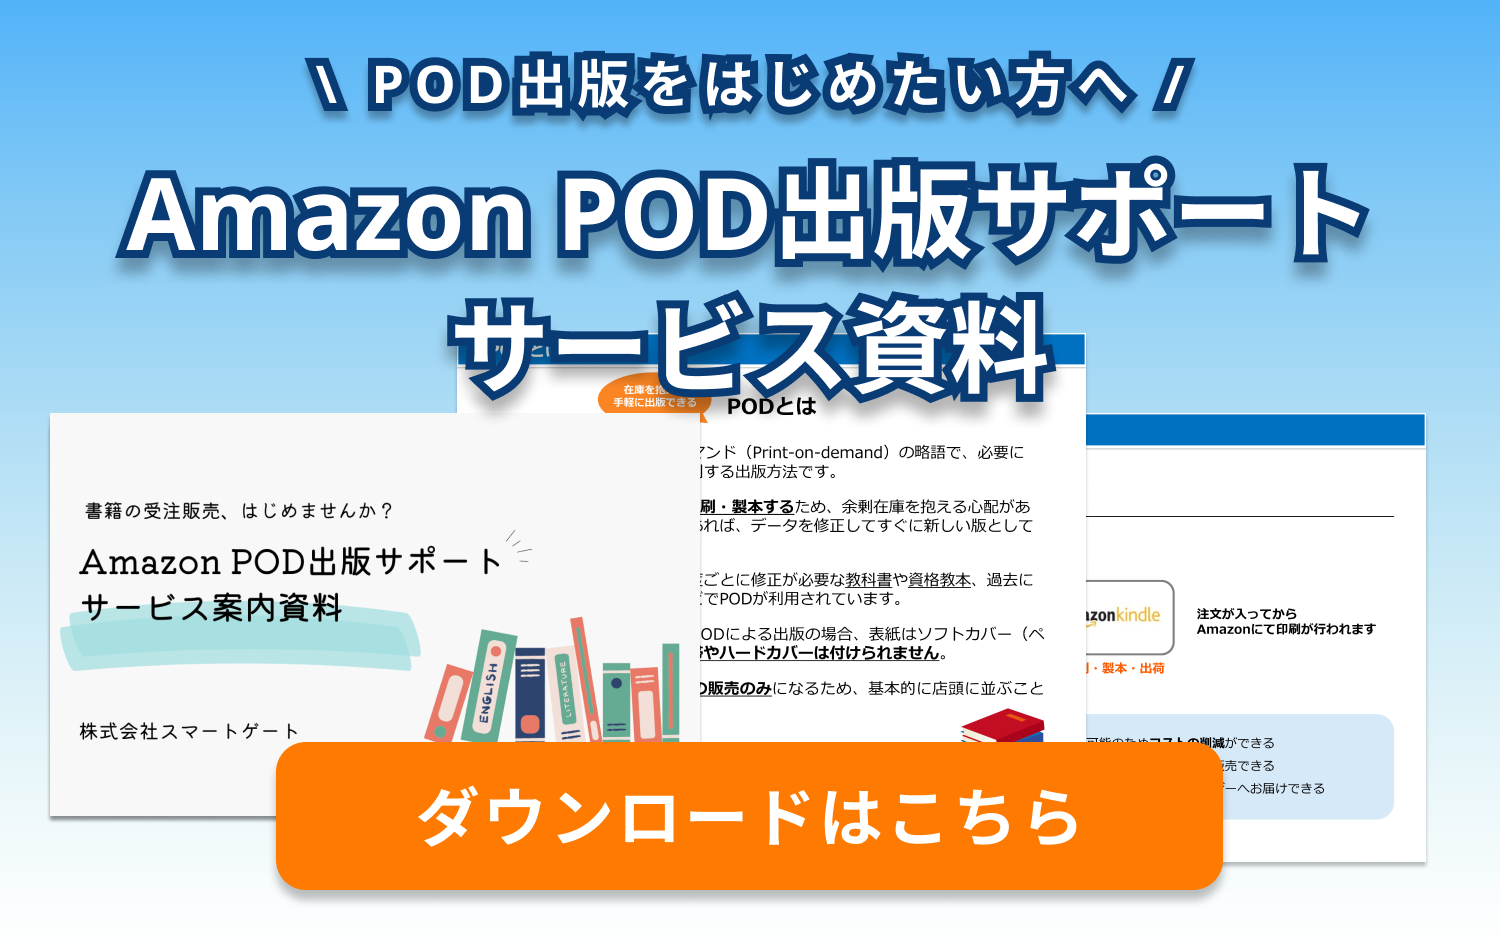 Amazon POD出版サポートサービス資料